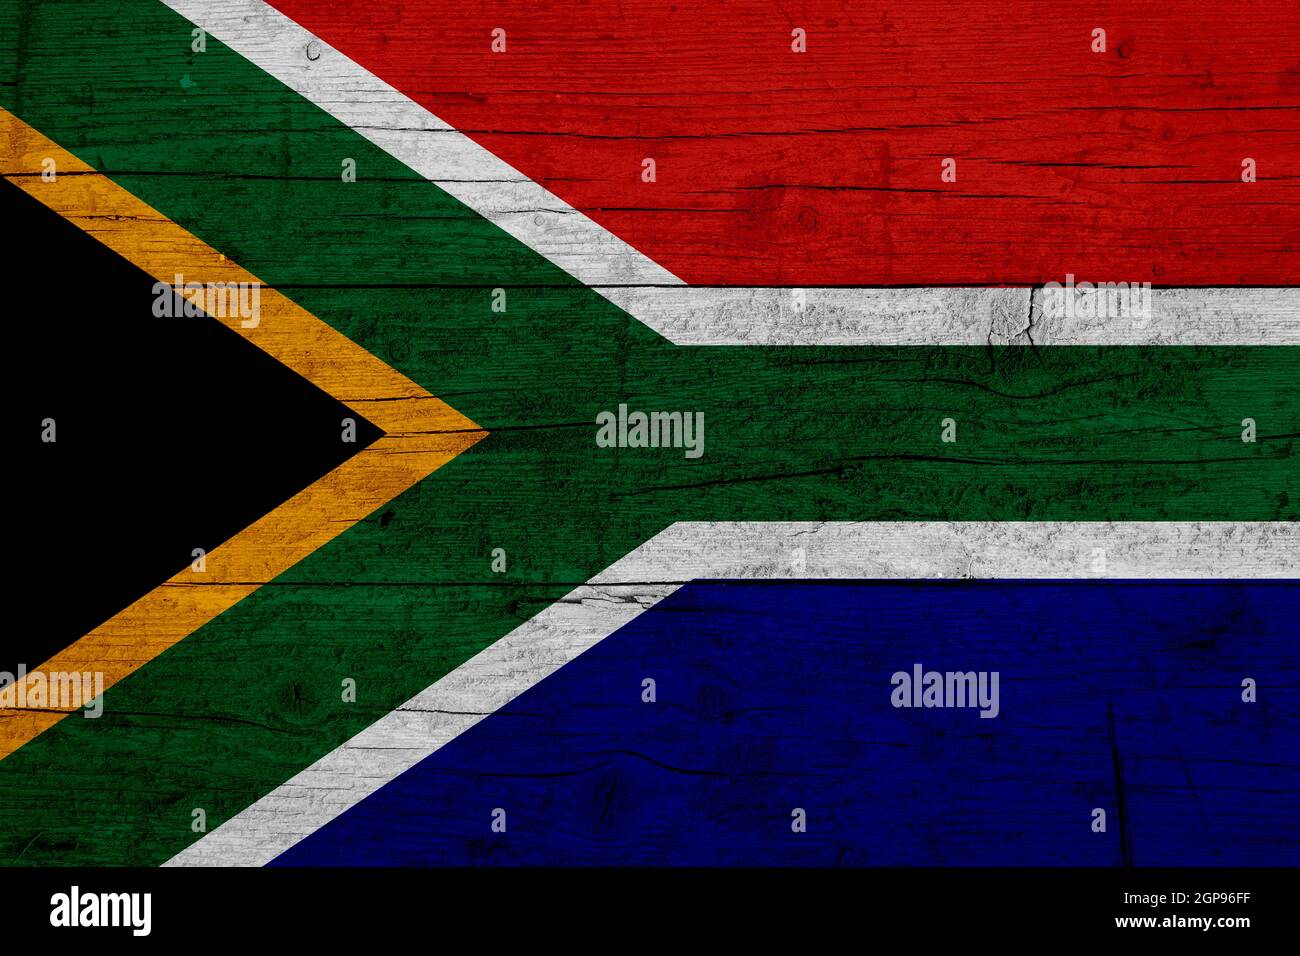 Bandera de la República de Sudáfrica. Textura de madera de la bandera de la República de Sudáfrica. Foto de stock